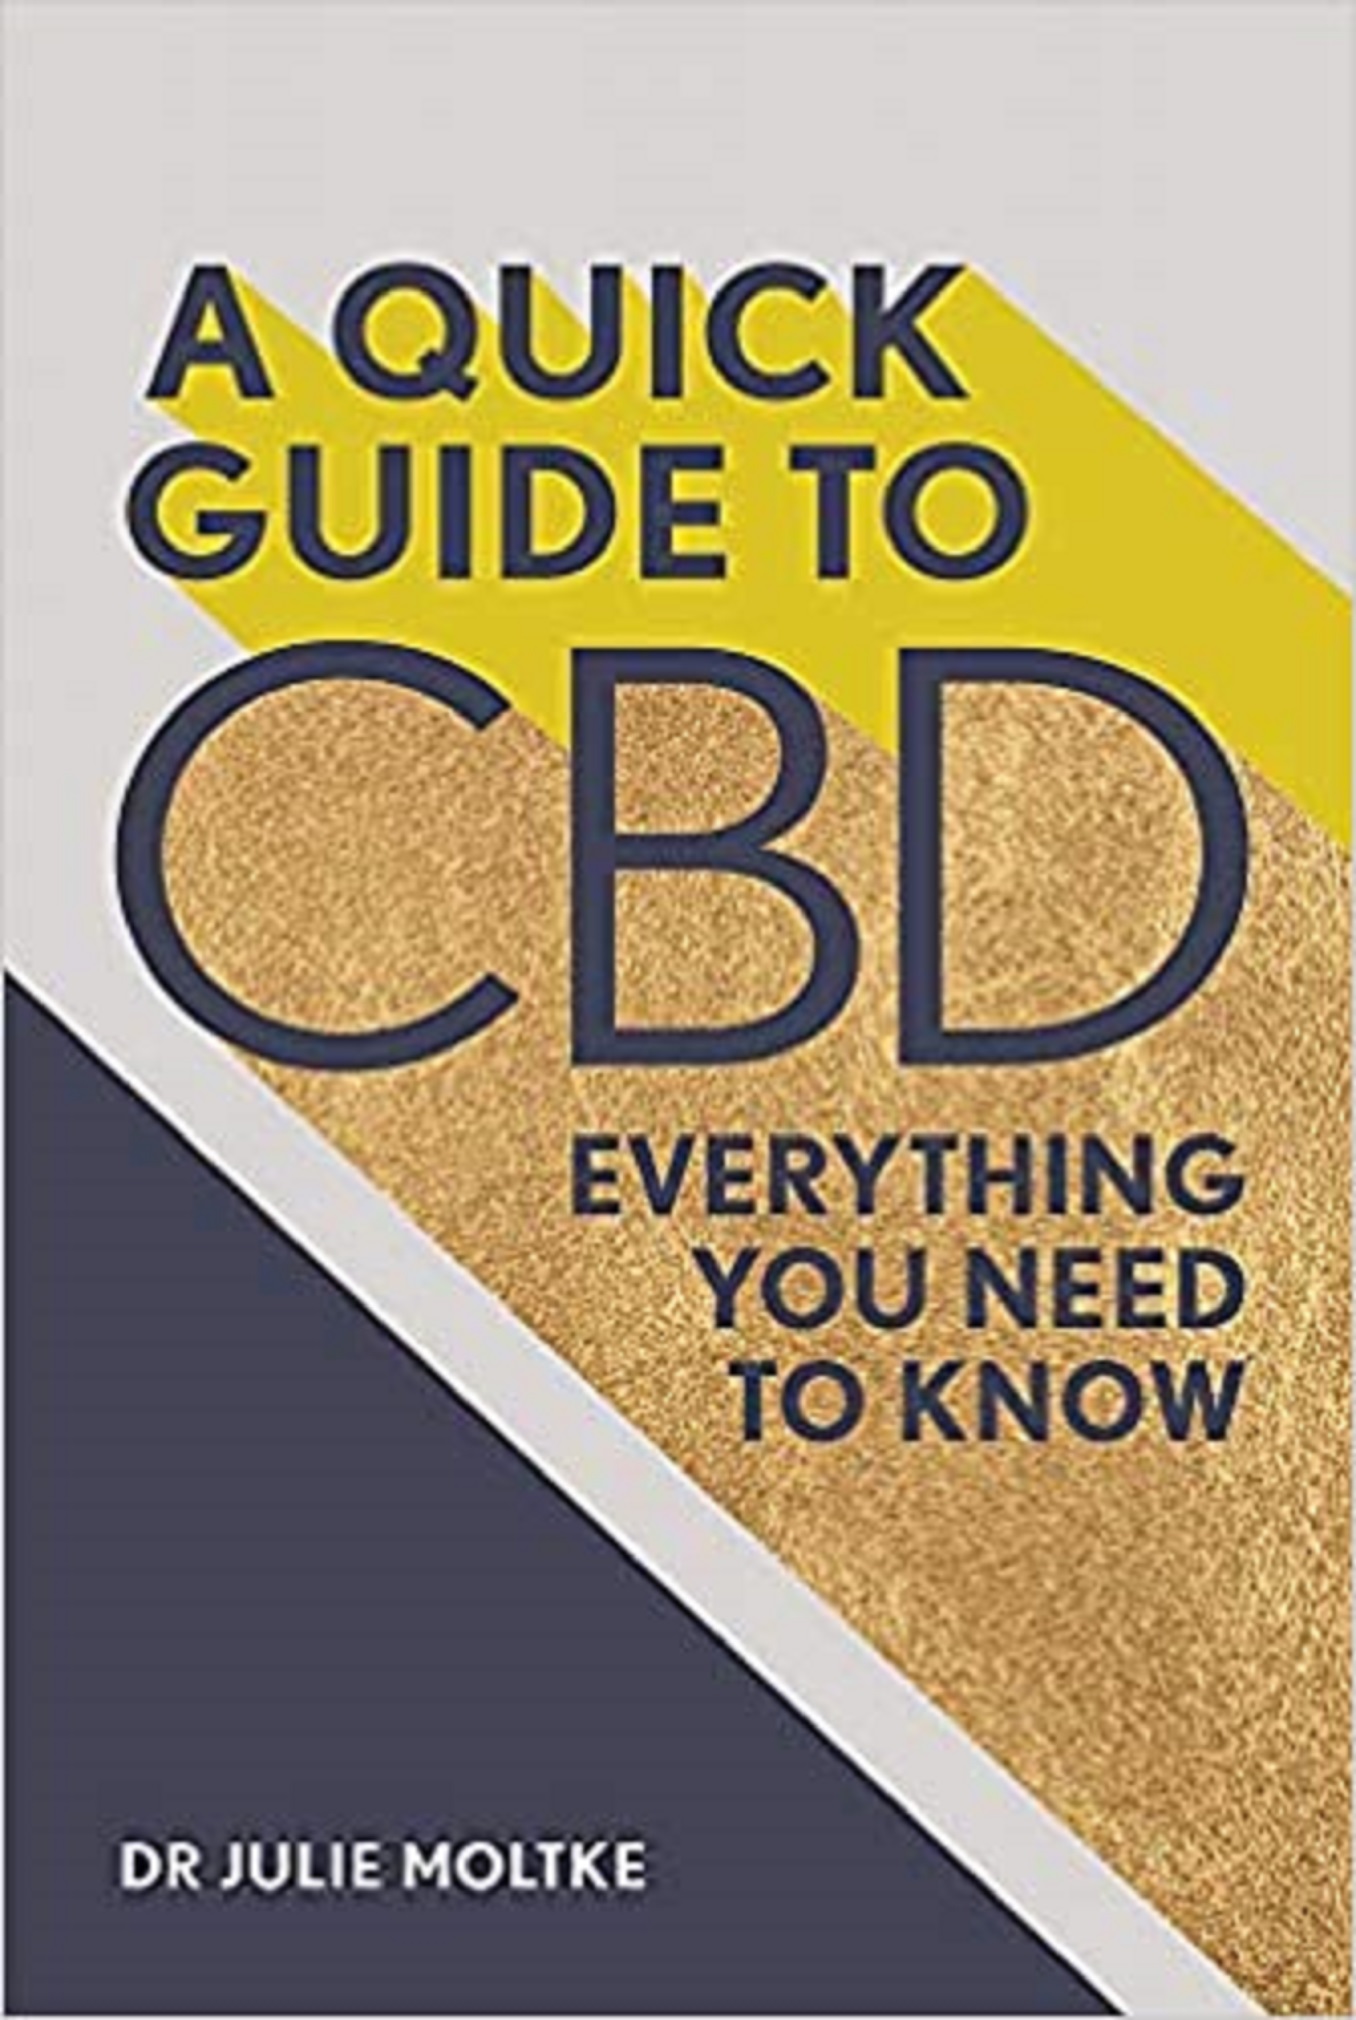 Quick Guide to CBD